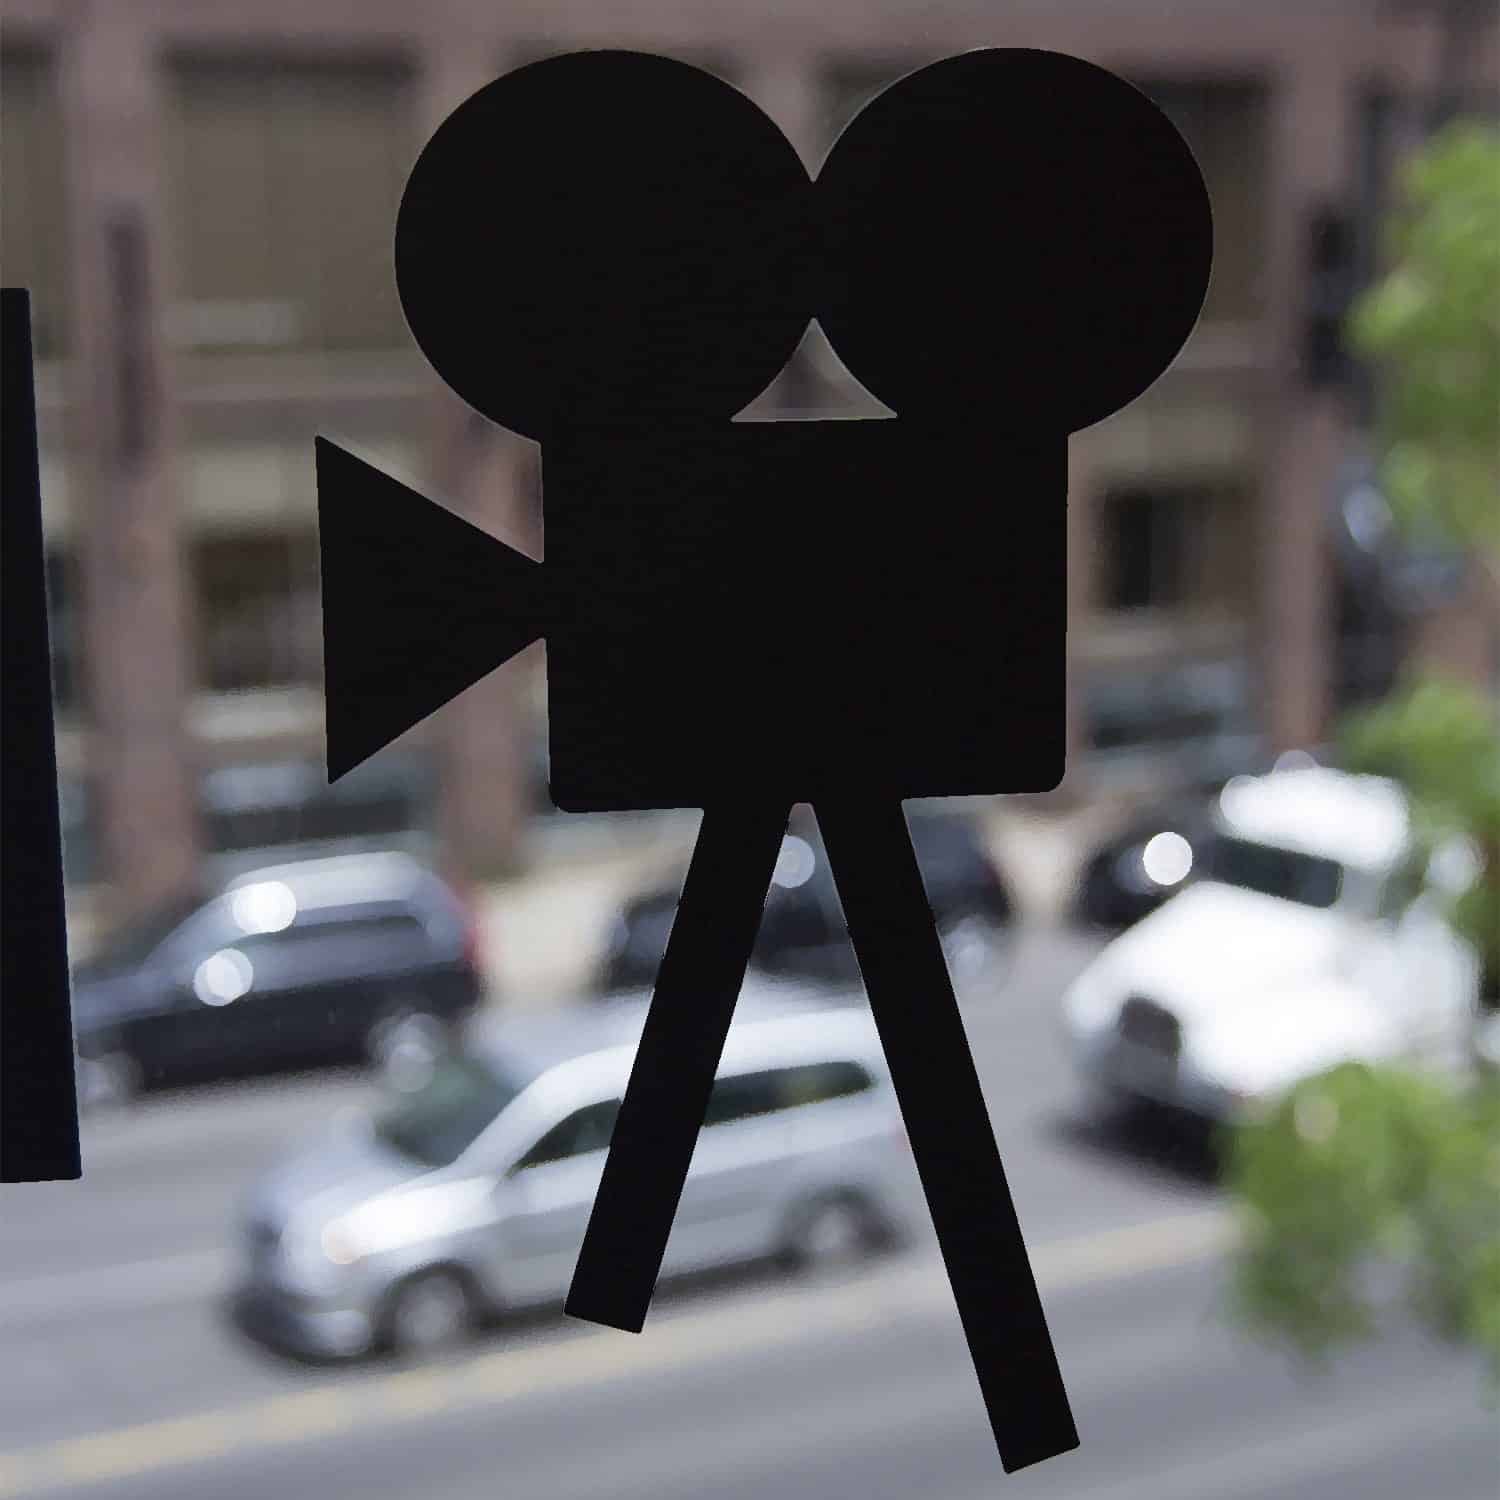 Are corporate video shoot permits necessary?